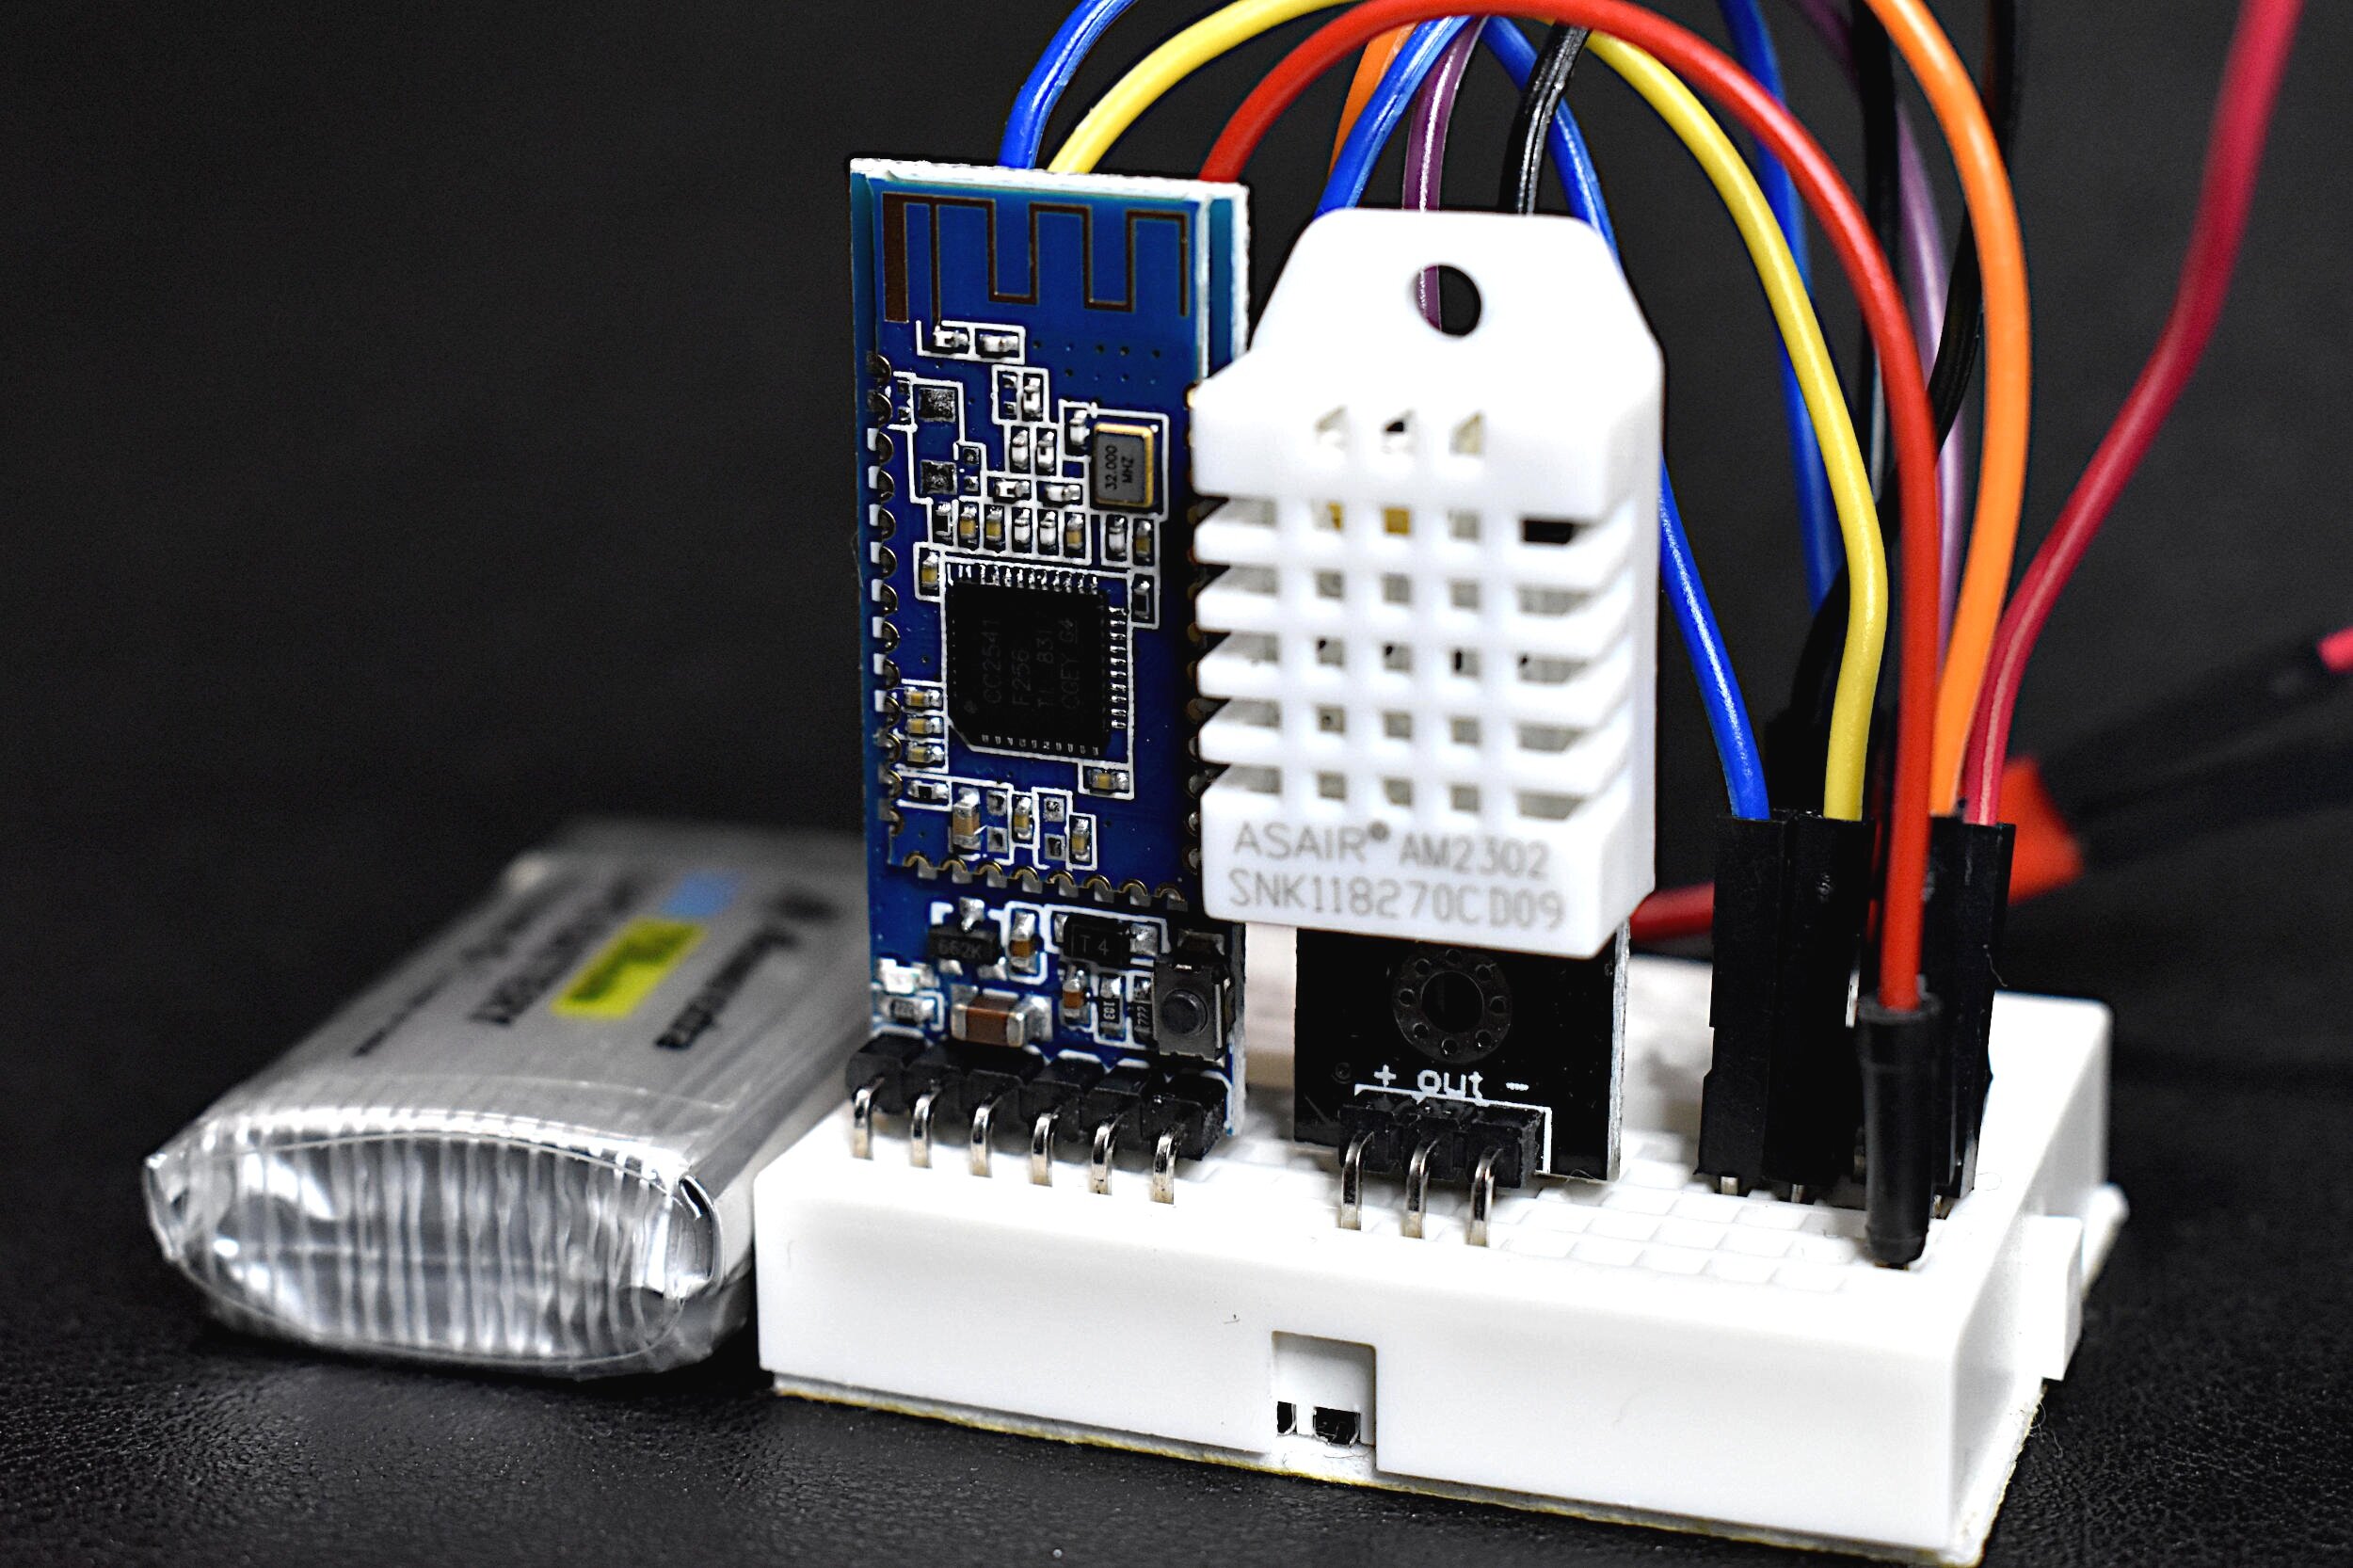 Attiny85 microcontroller. Bluetooth HC-06. Arduino IDE - Internet of Things  - MIT App Inventor Community